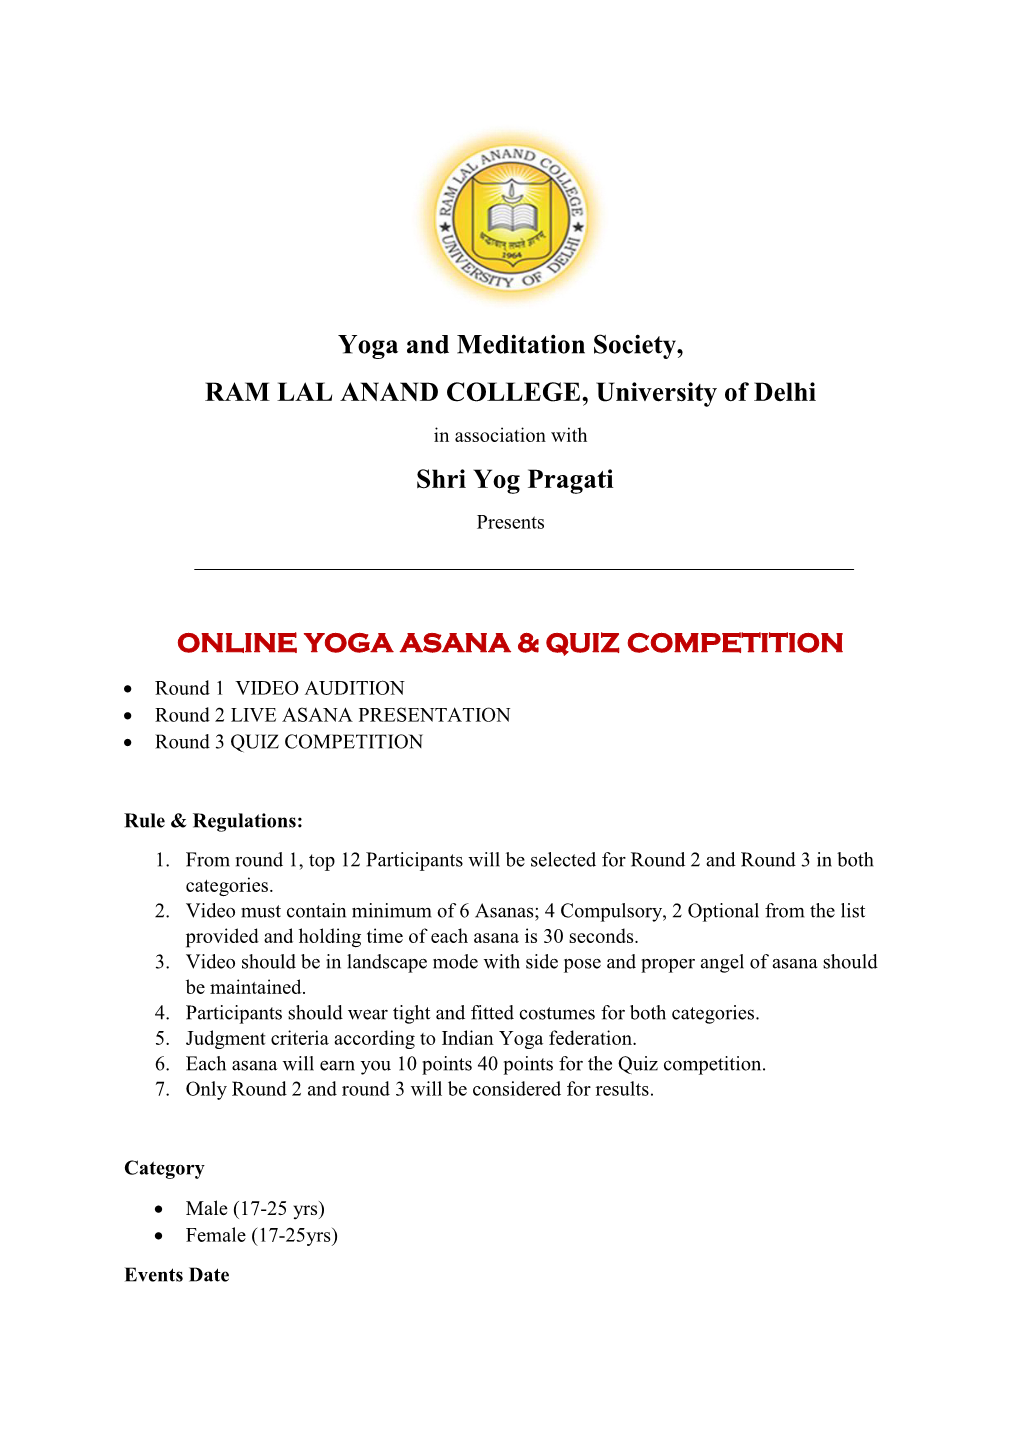 Yoga and Meditation Society, RAM LAL ANAND COLLEGE, University of Delhi in Association with Shri Yog Pragati Presents